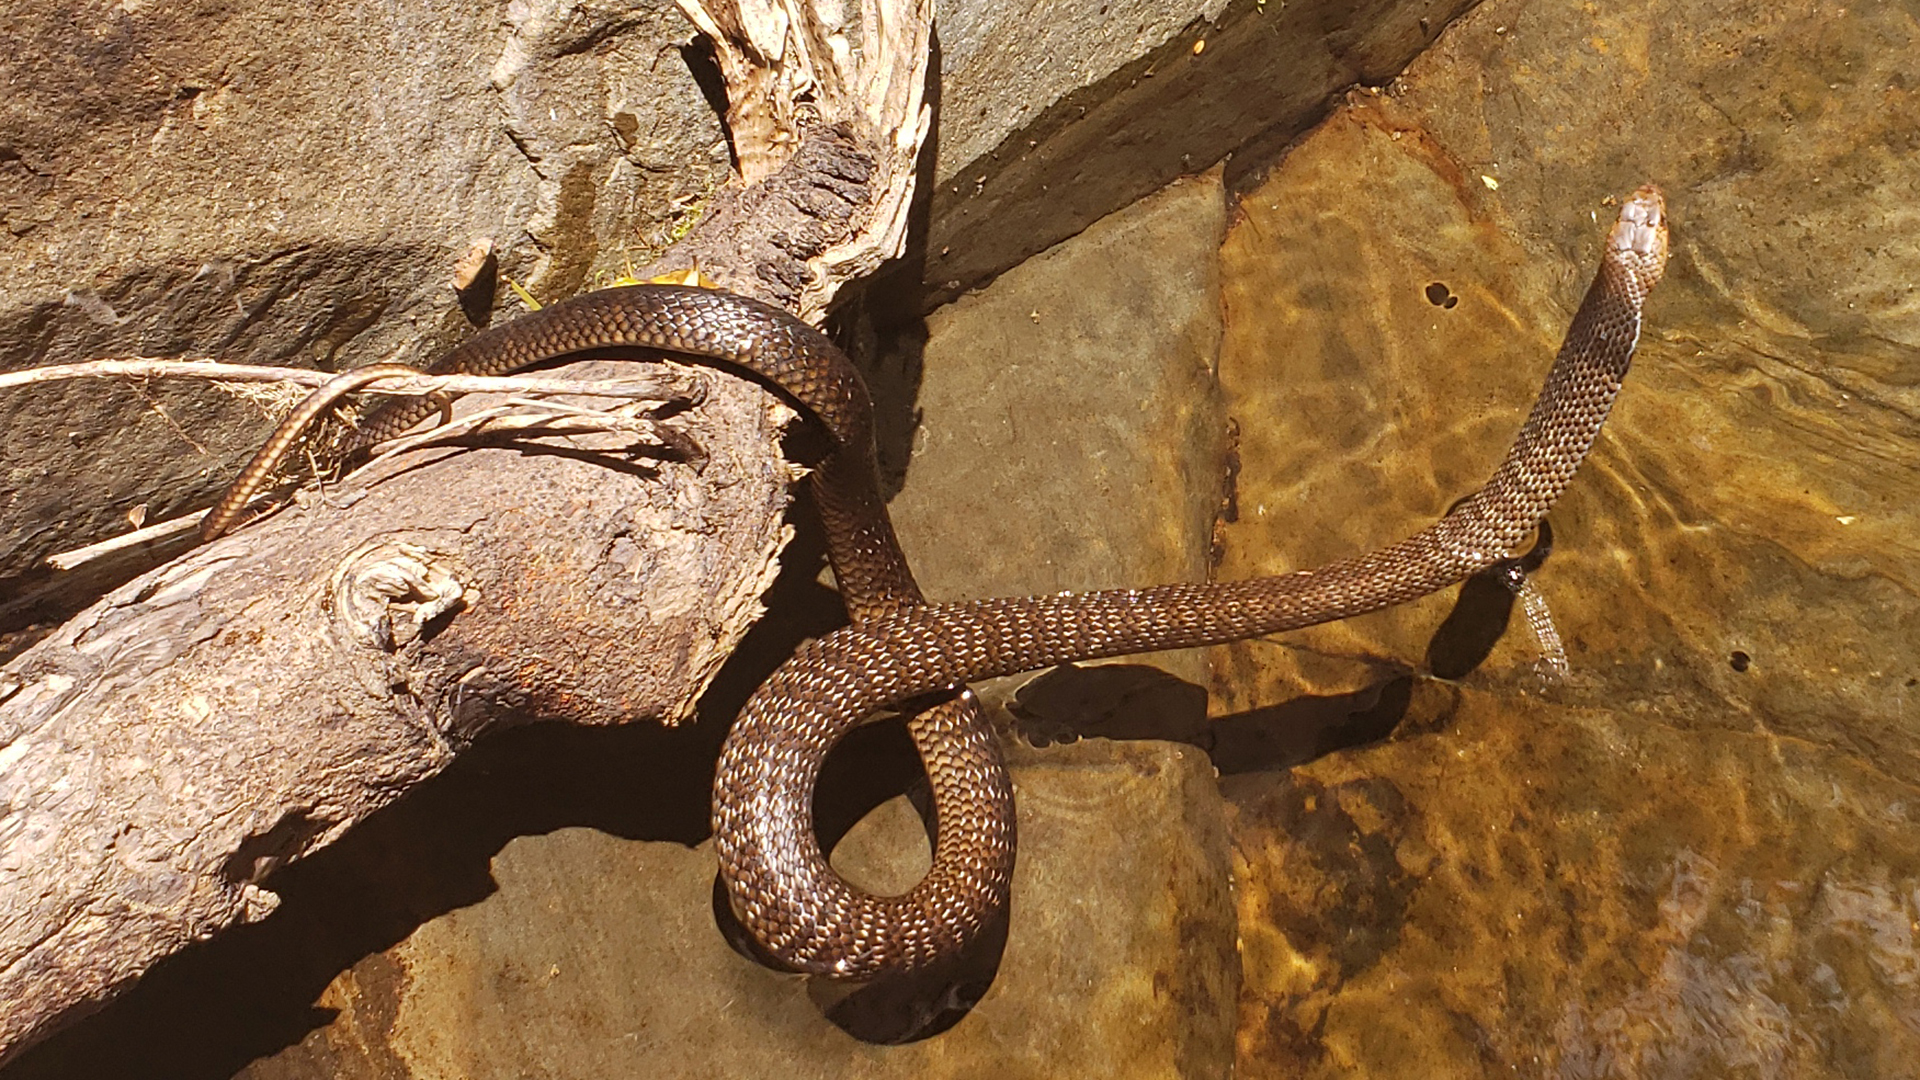 An eastern brown snake that Brett trod on in the Ettrema Wilderness